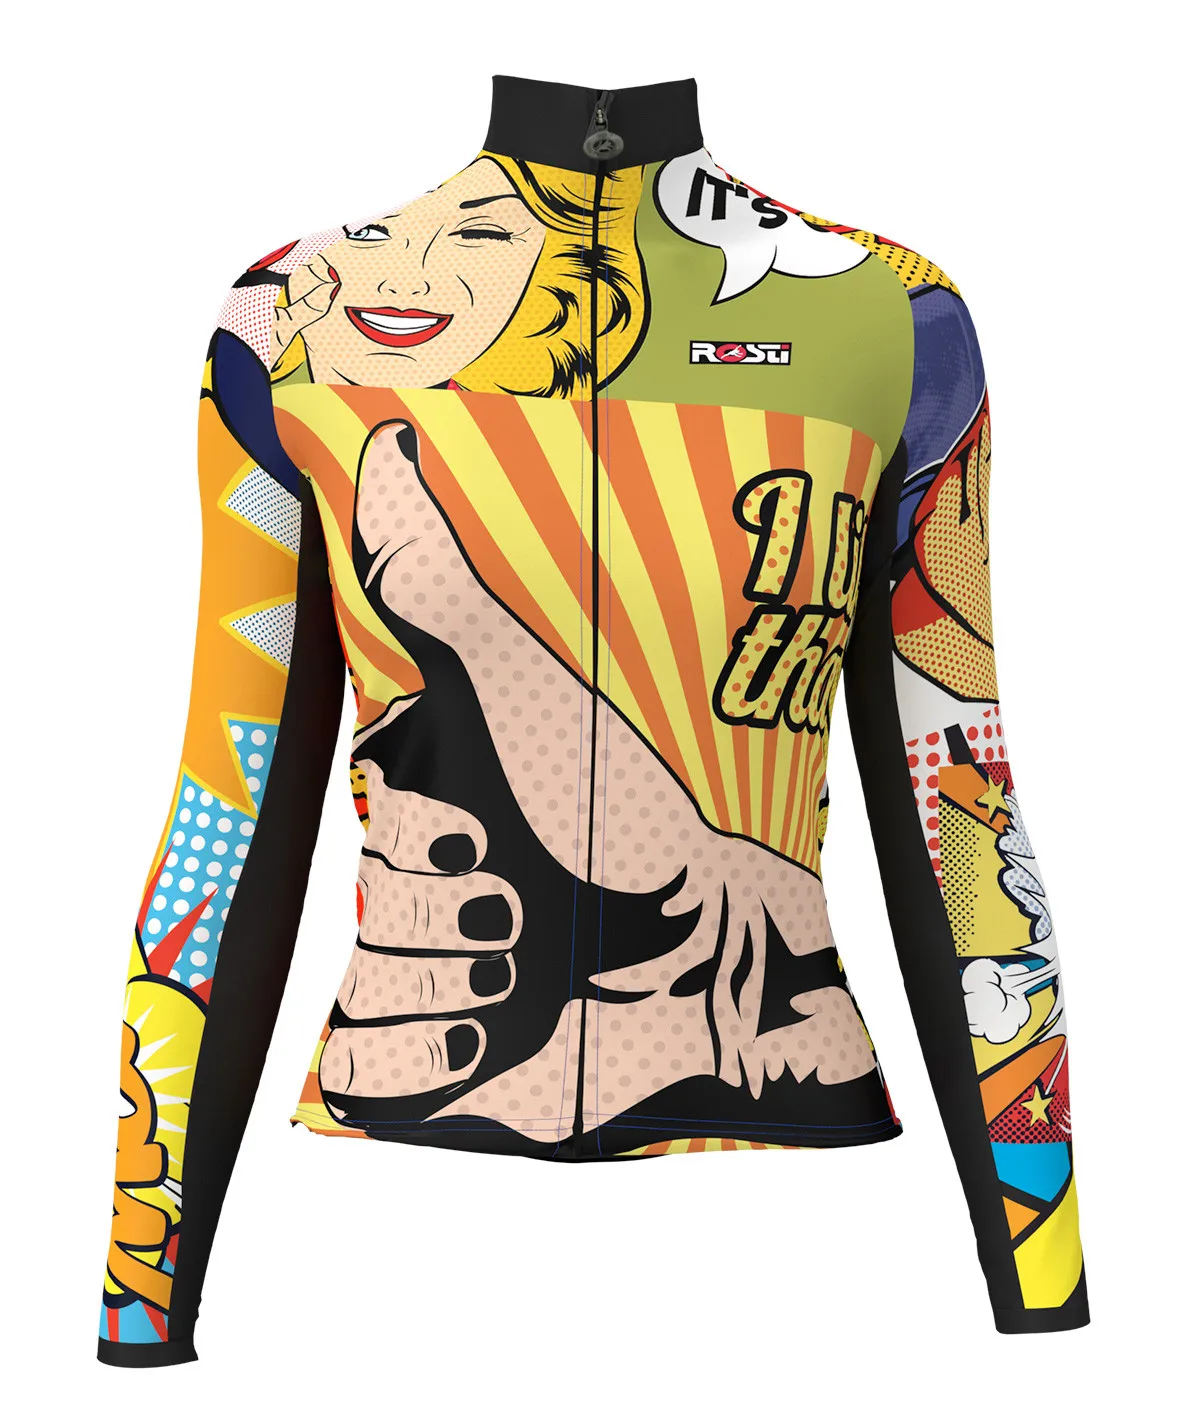 Winter Men's Long Sleeve Thermal Fleece Warm Cycling Jackets Professional Team Maillot Racing Clothing Aero Uniform Sportswear